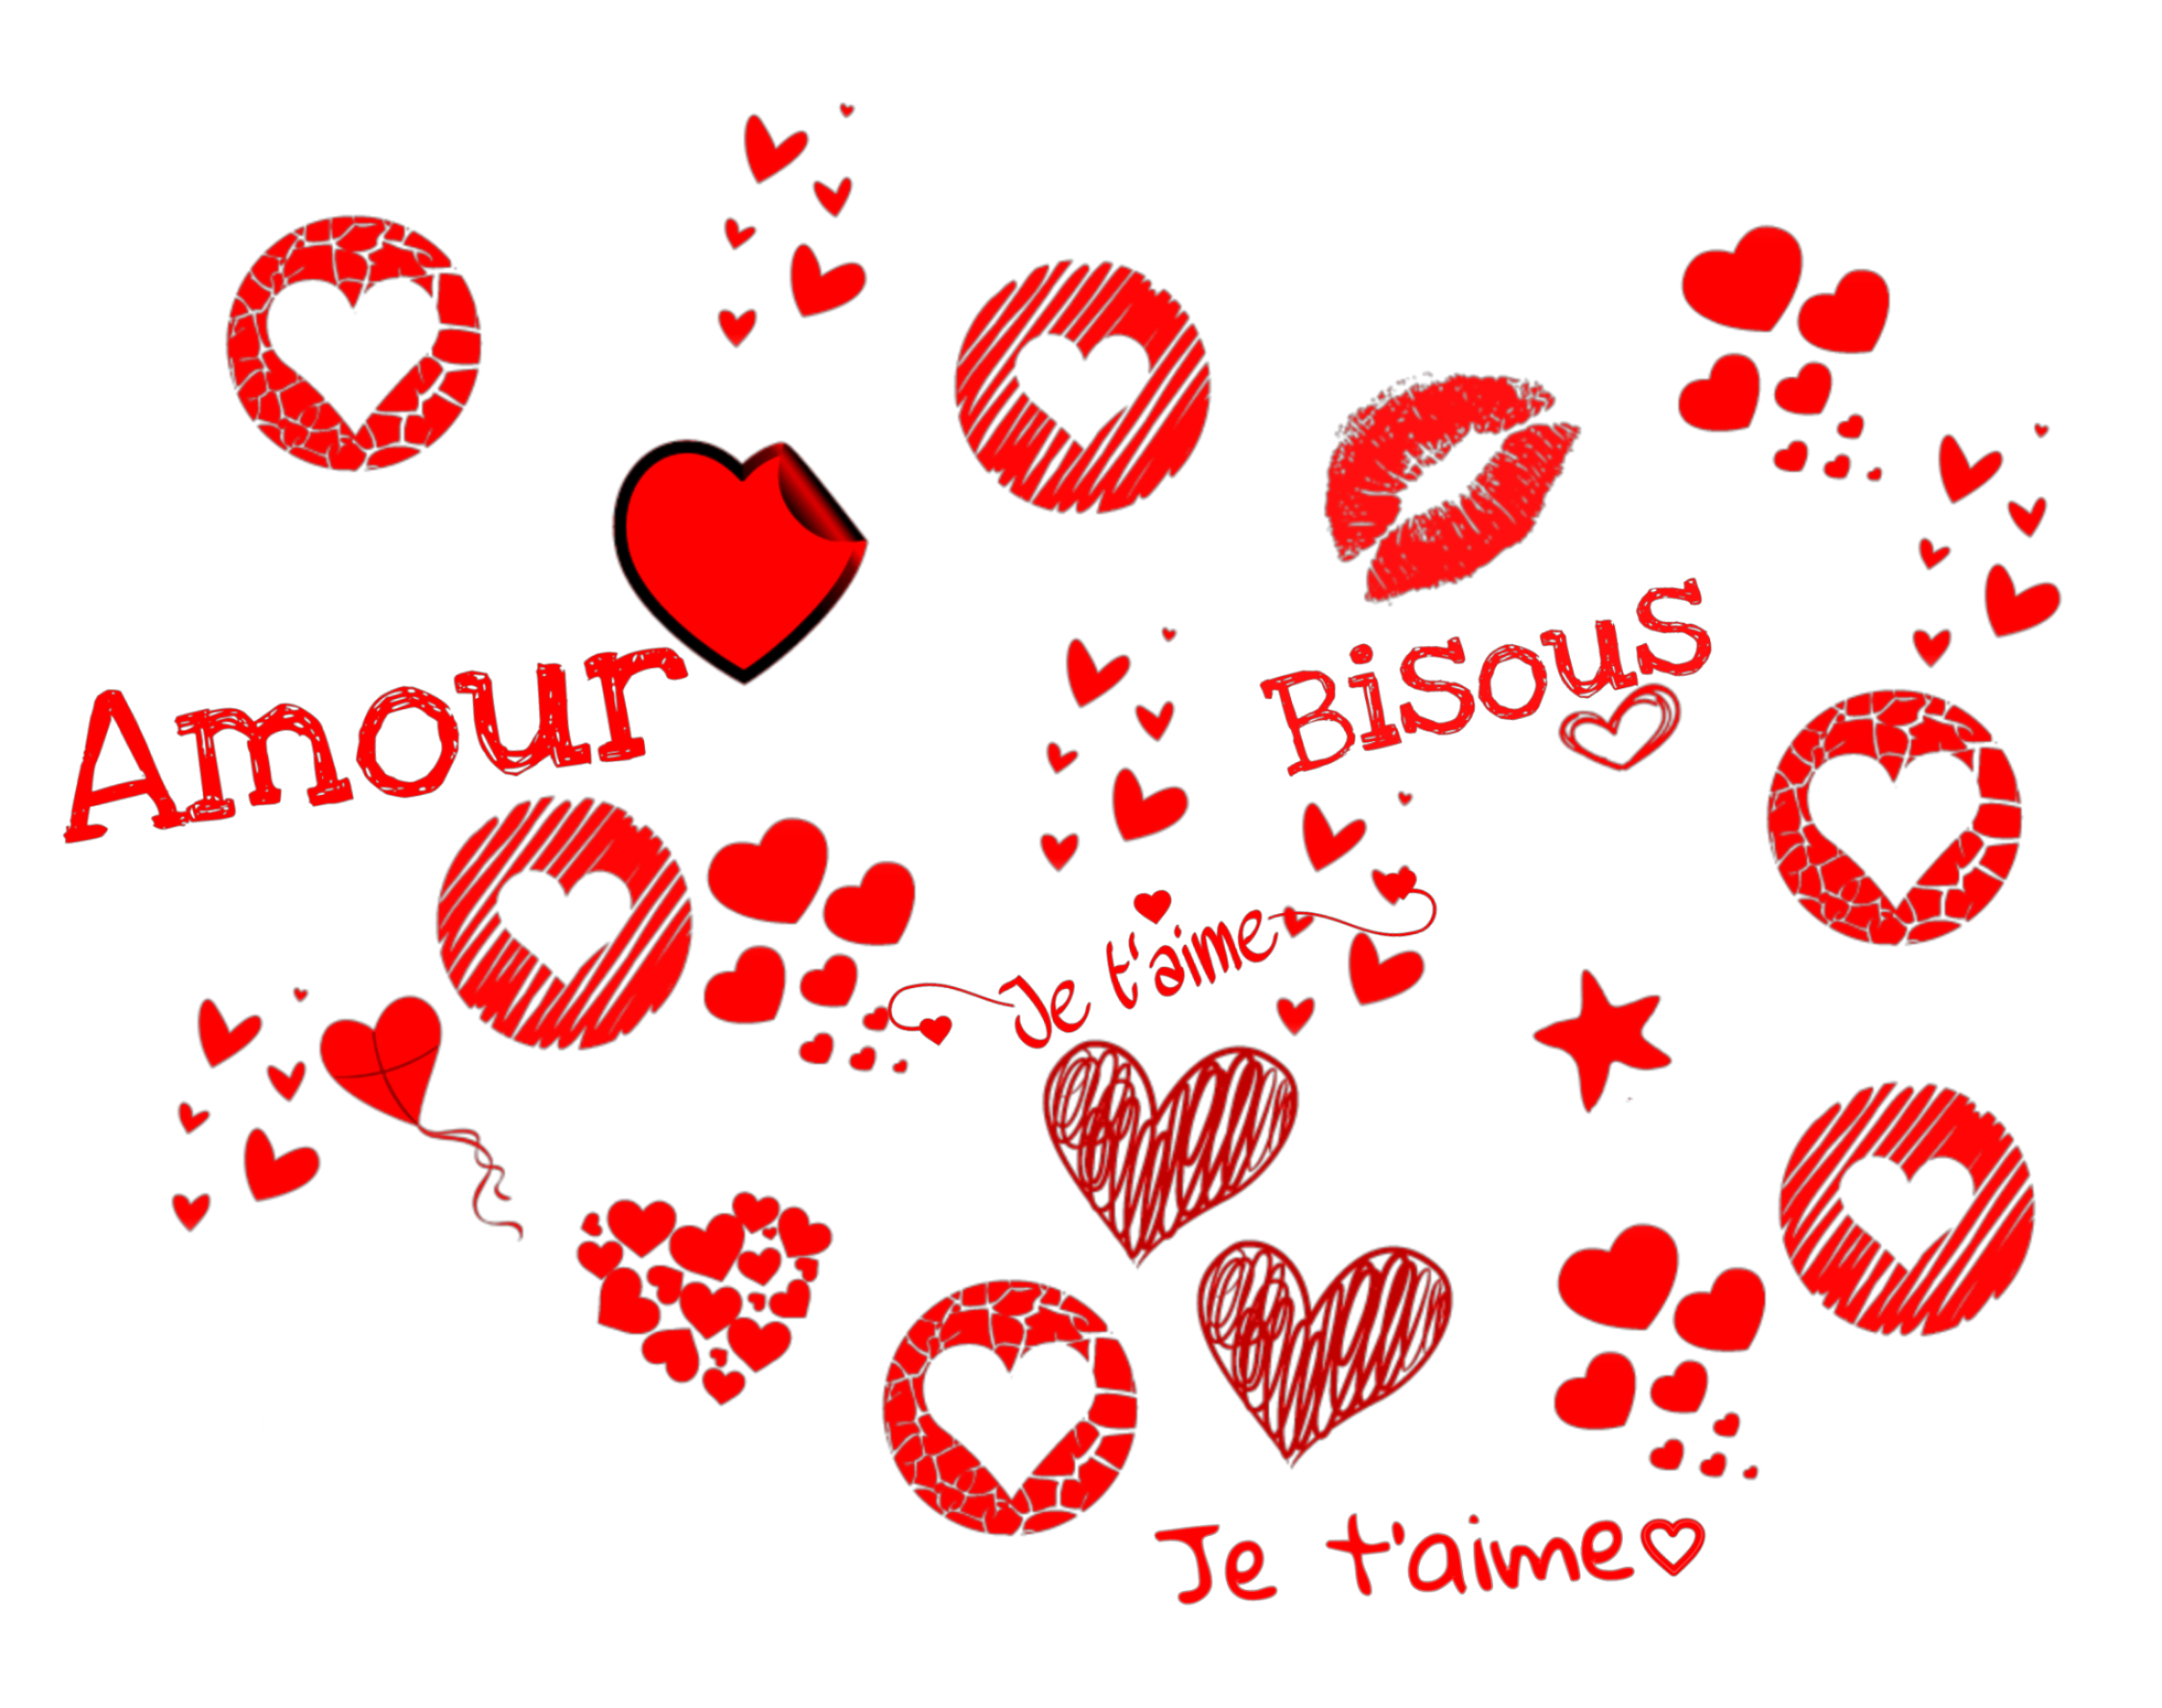 Amour Jetaime Bisous Bisous Sentiment Francais French